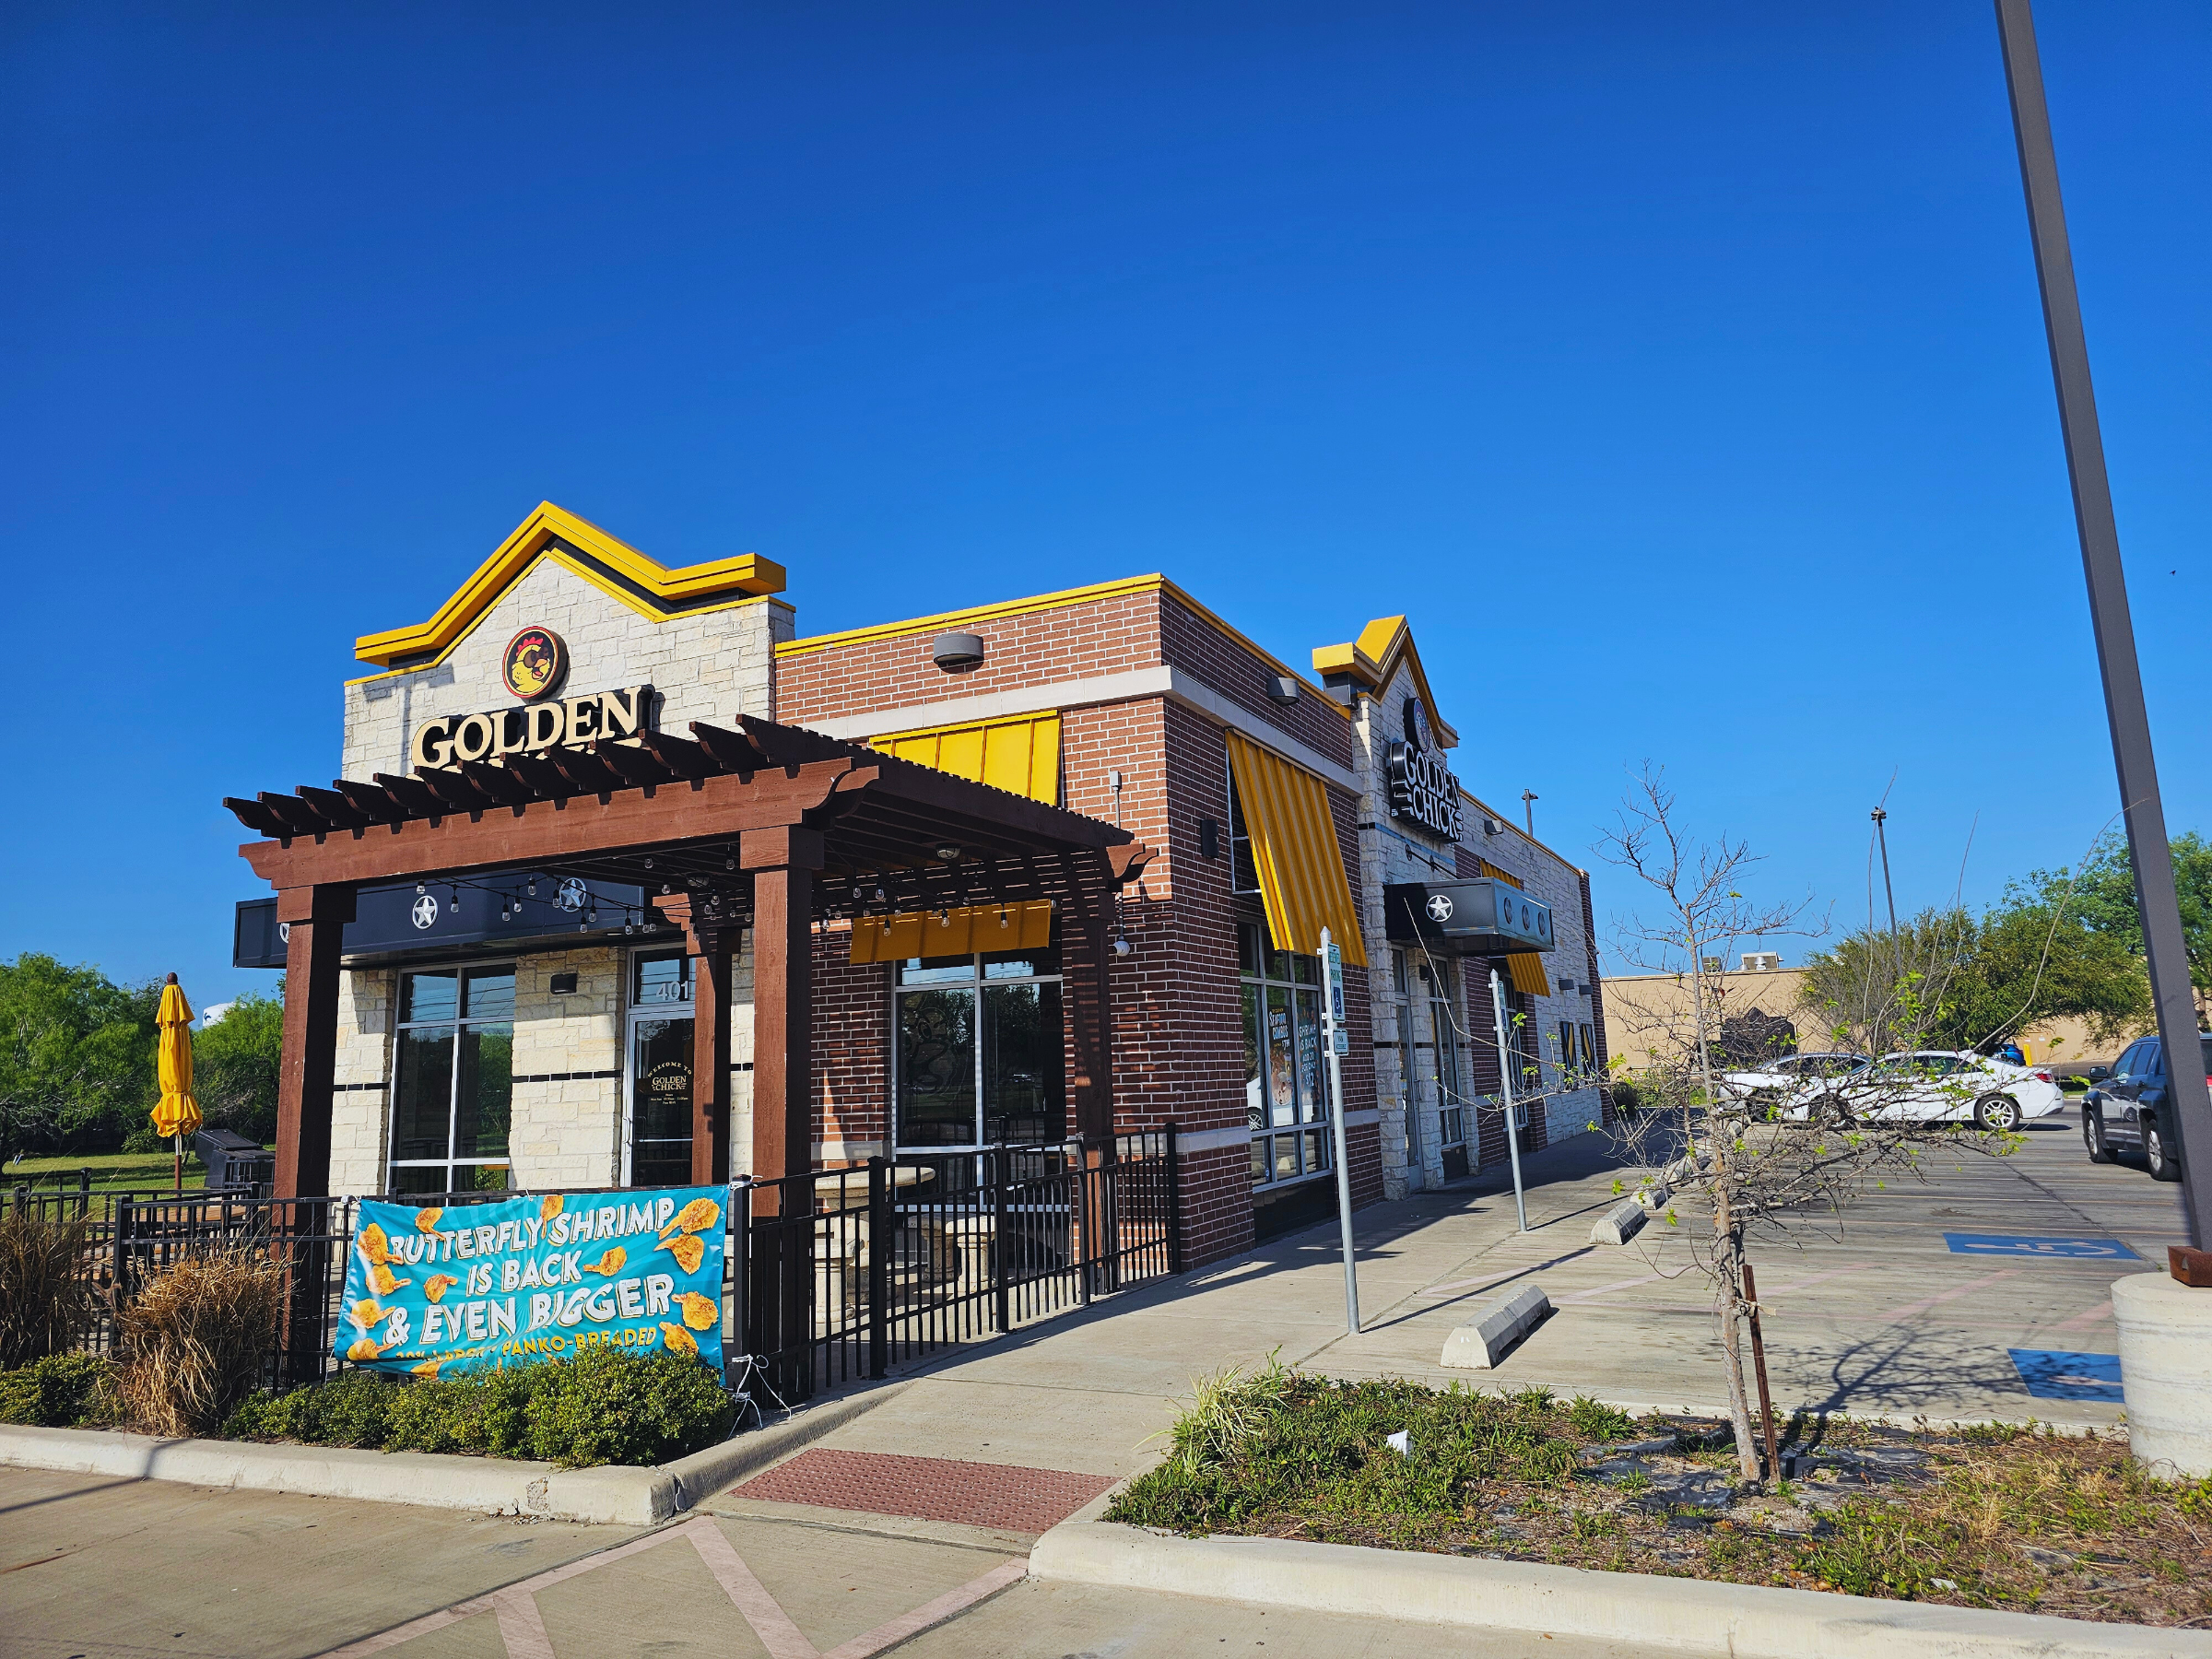 Golden Chick storefront.  Your local Golden Chick fast food restaurant in Edinburg, Texas